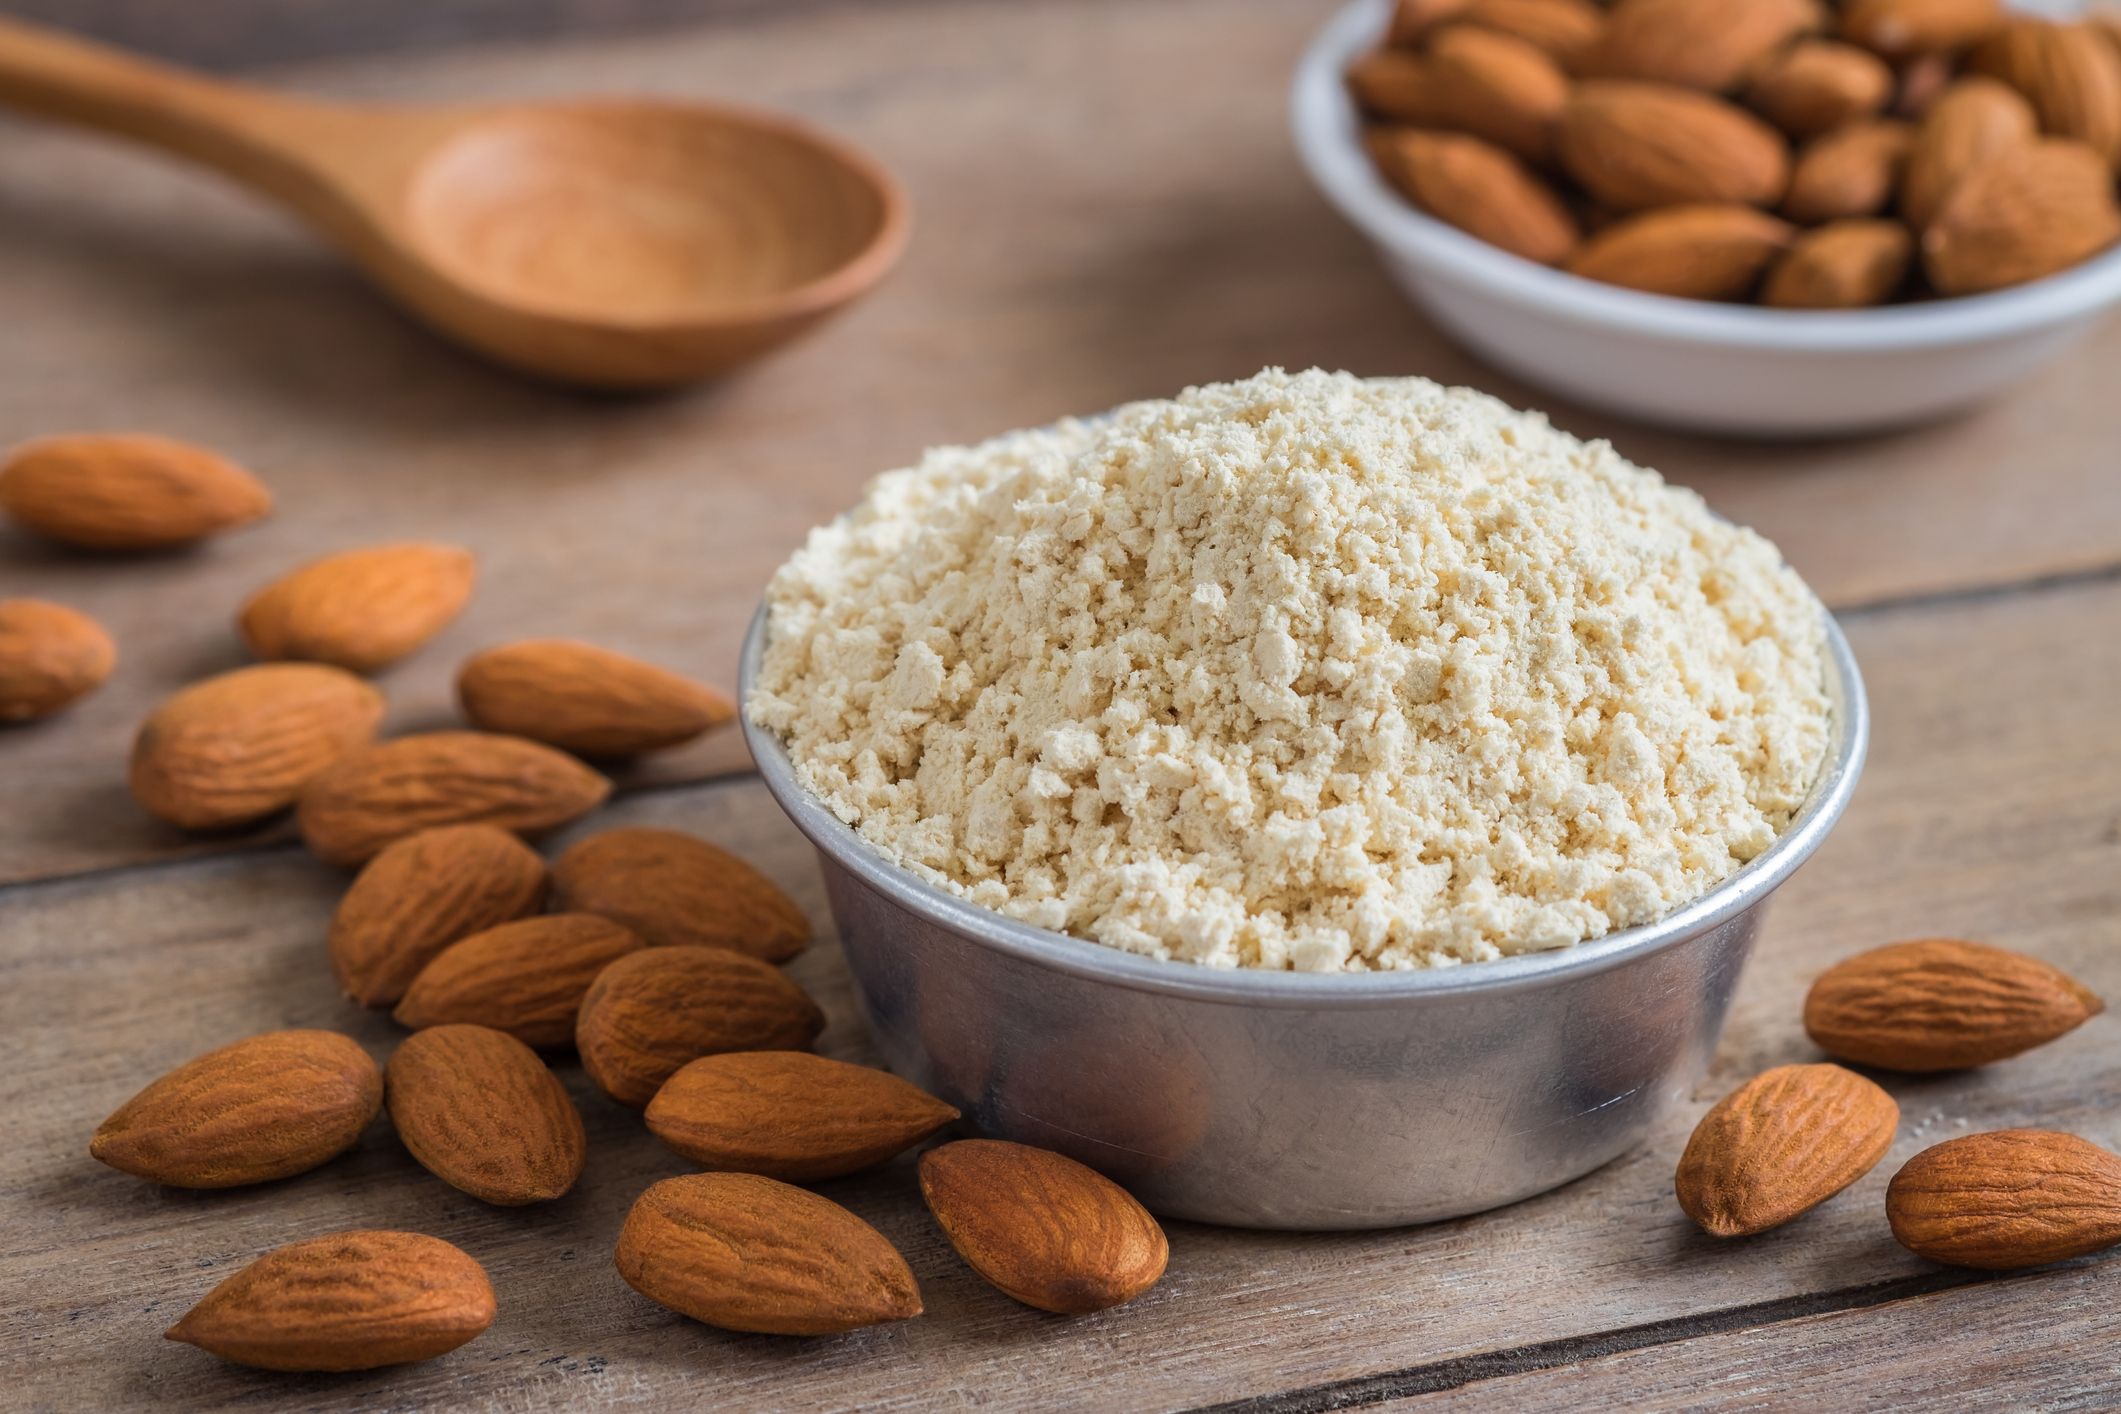 Does almond flour act the same as all purpose flour?